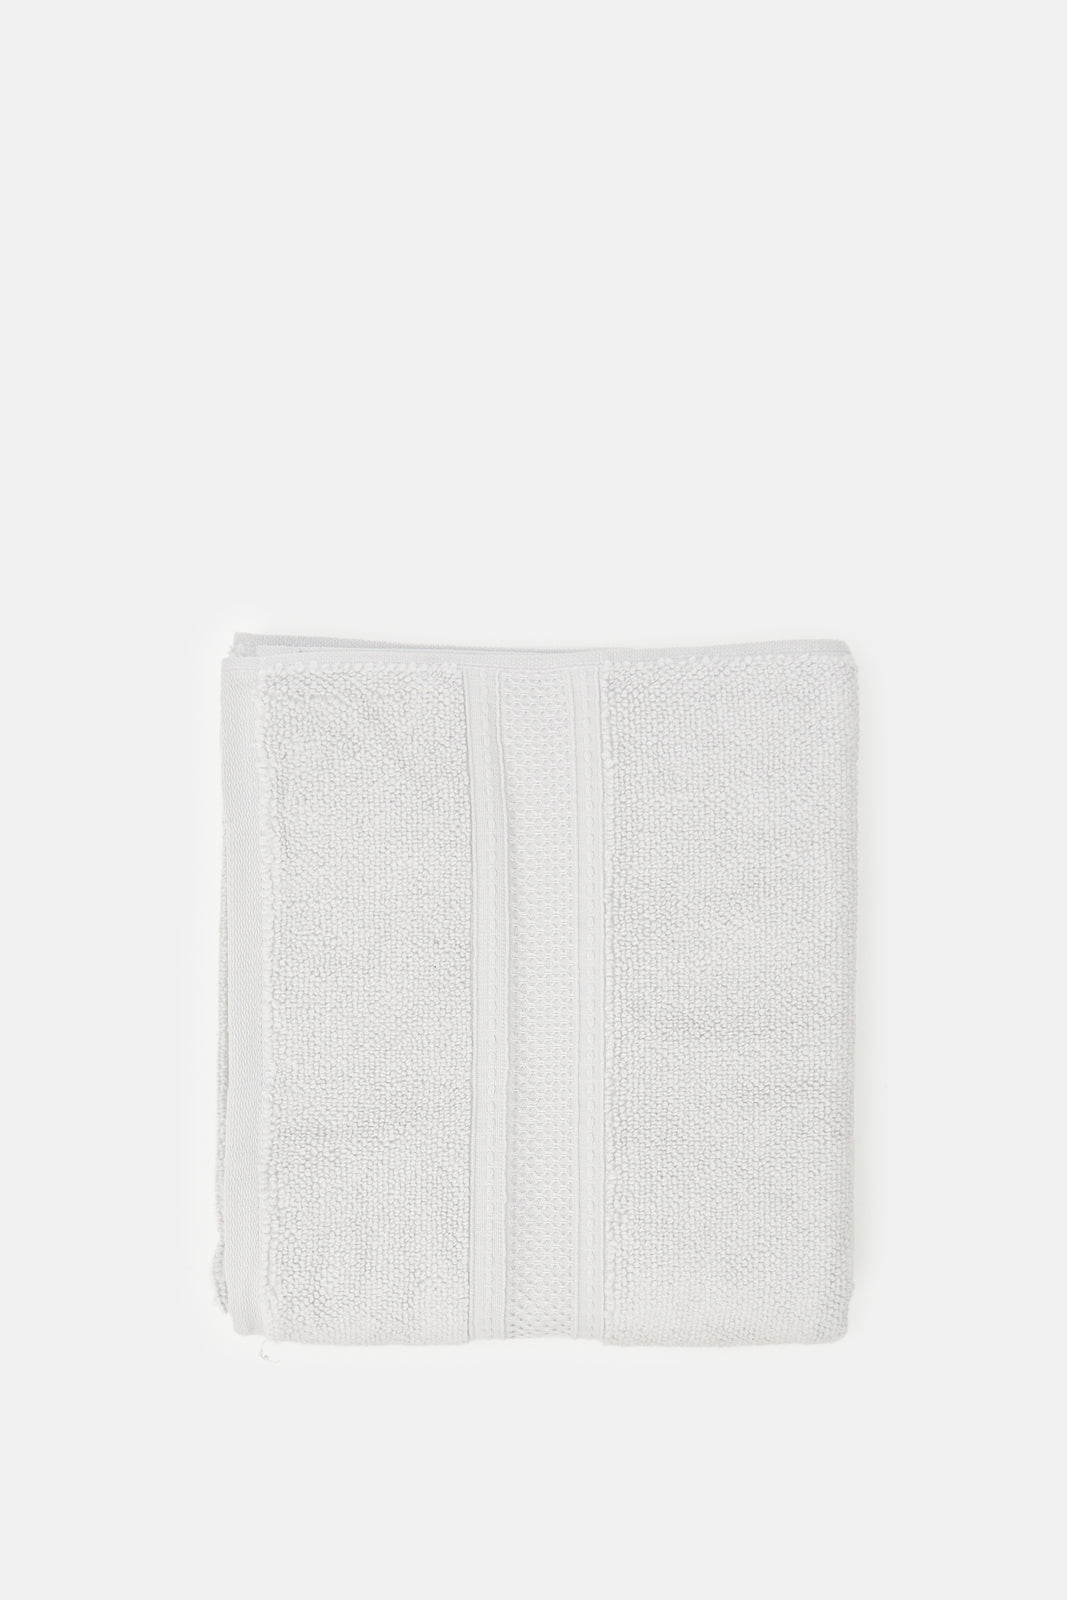 

Grey Textured Cotton Hand Towel